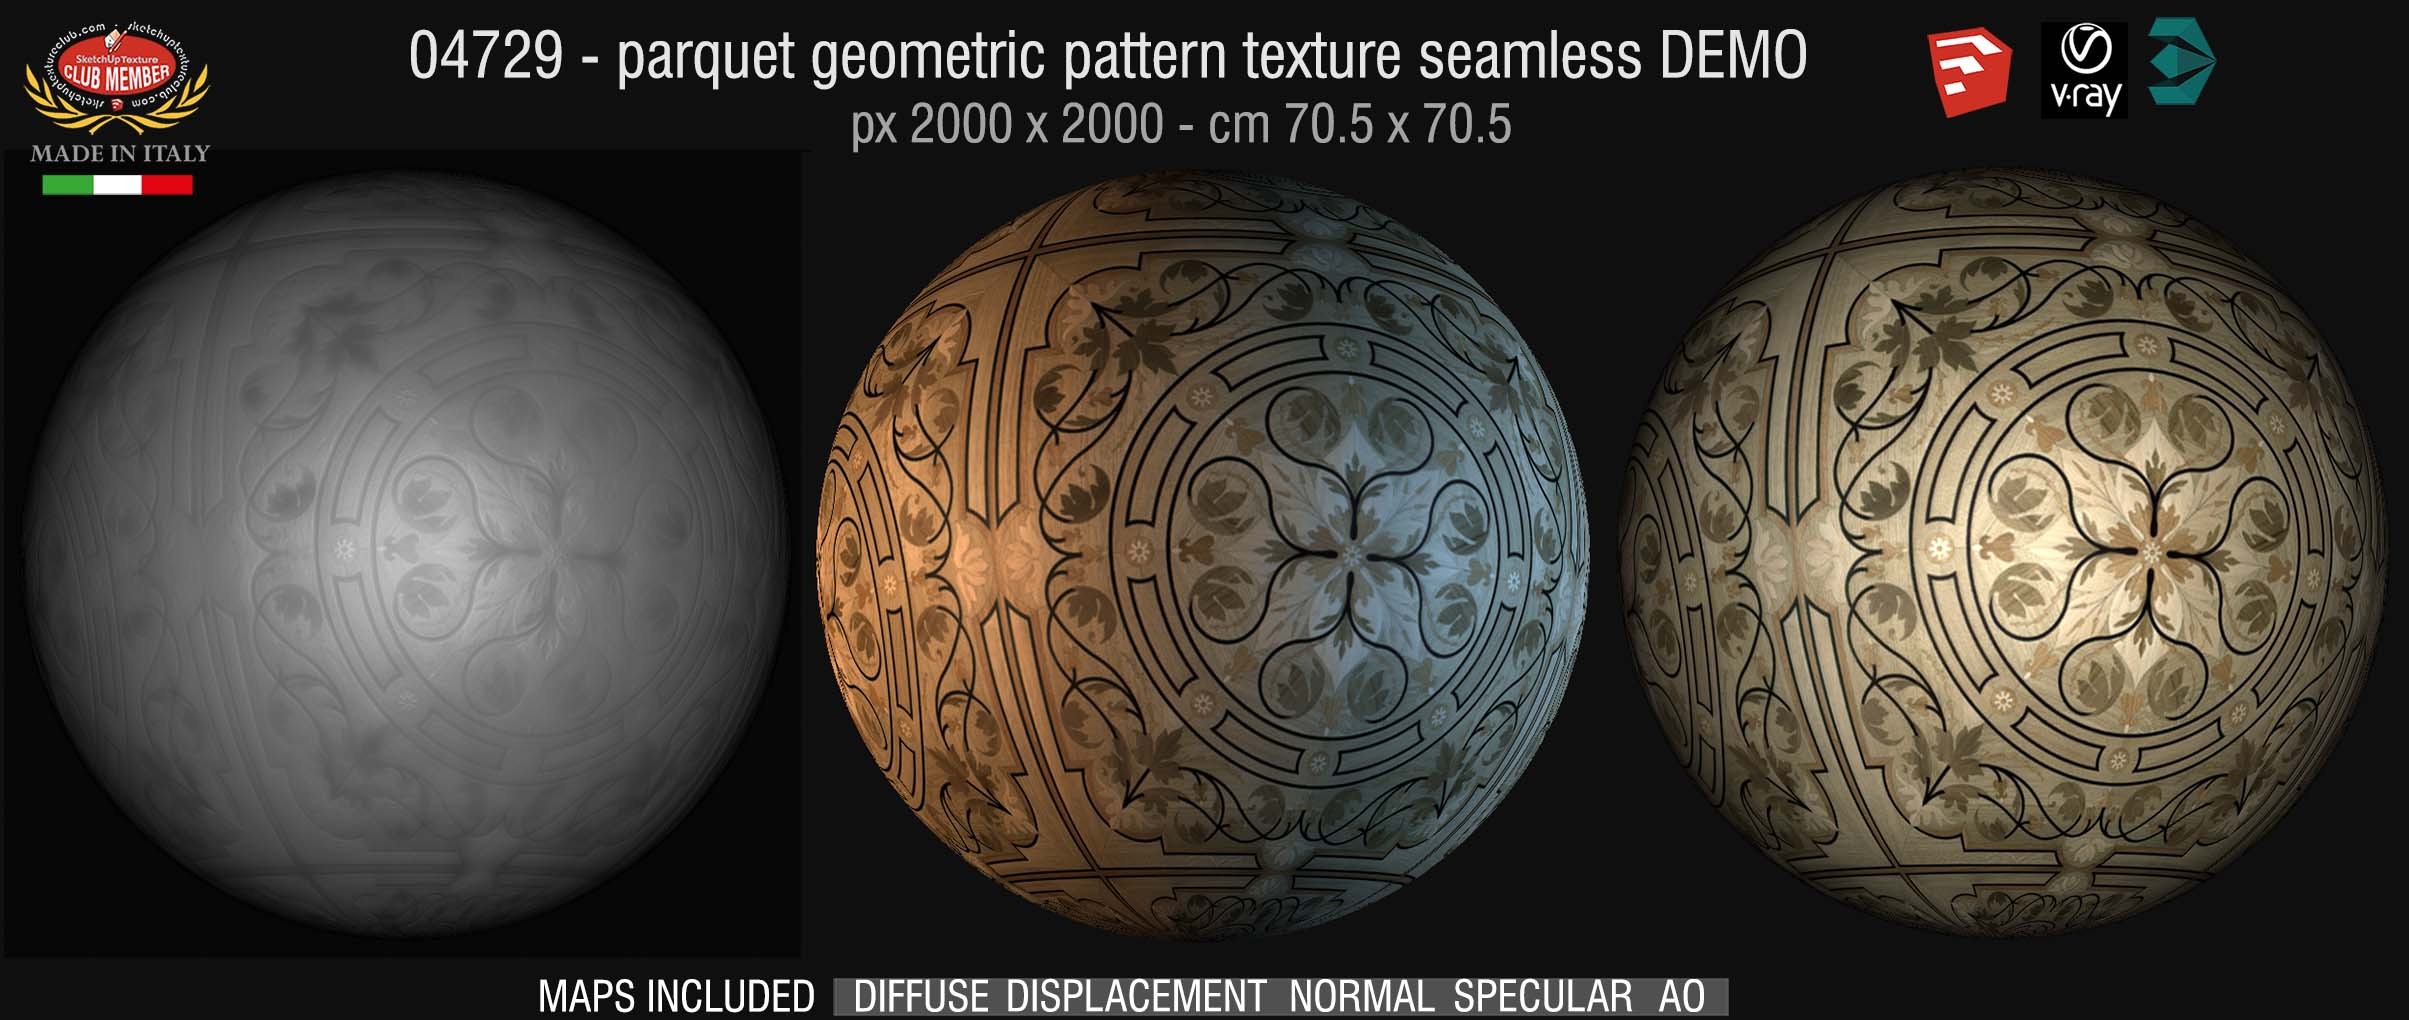 04729 HR Parquet geometric pattern texture seamless + maps DEMO